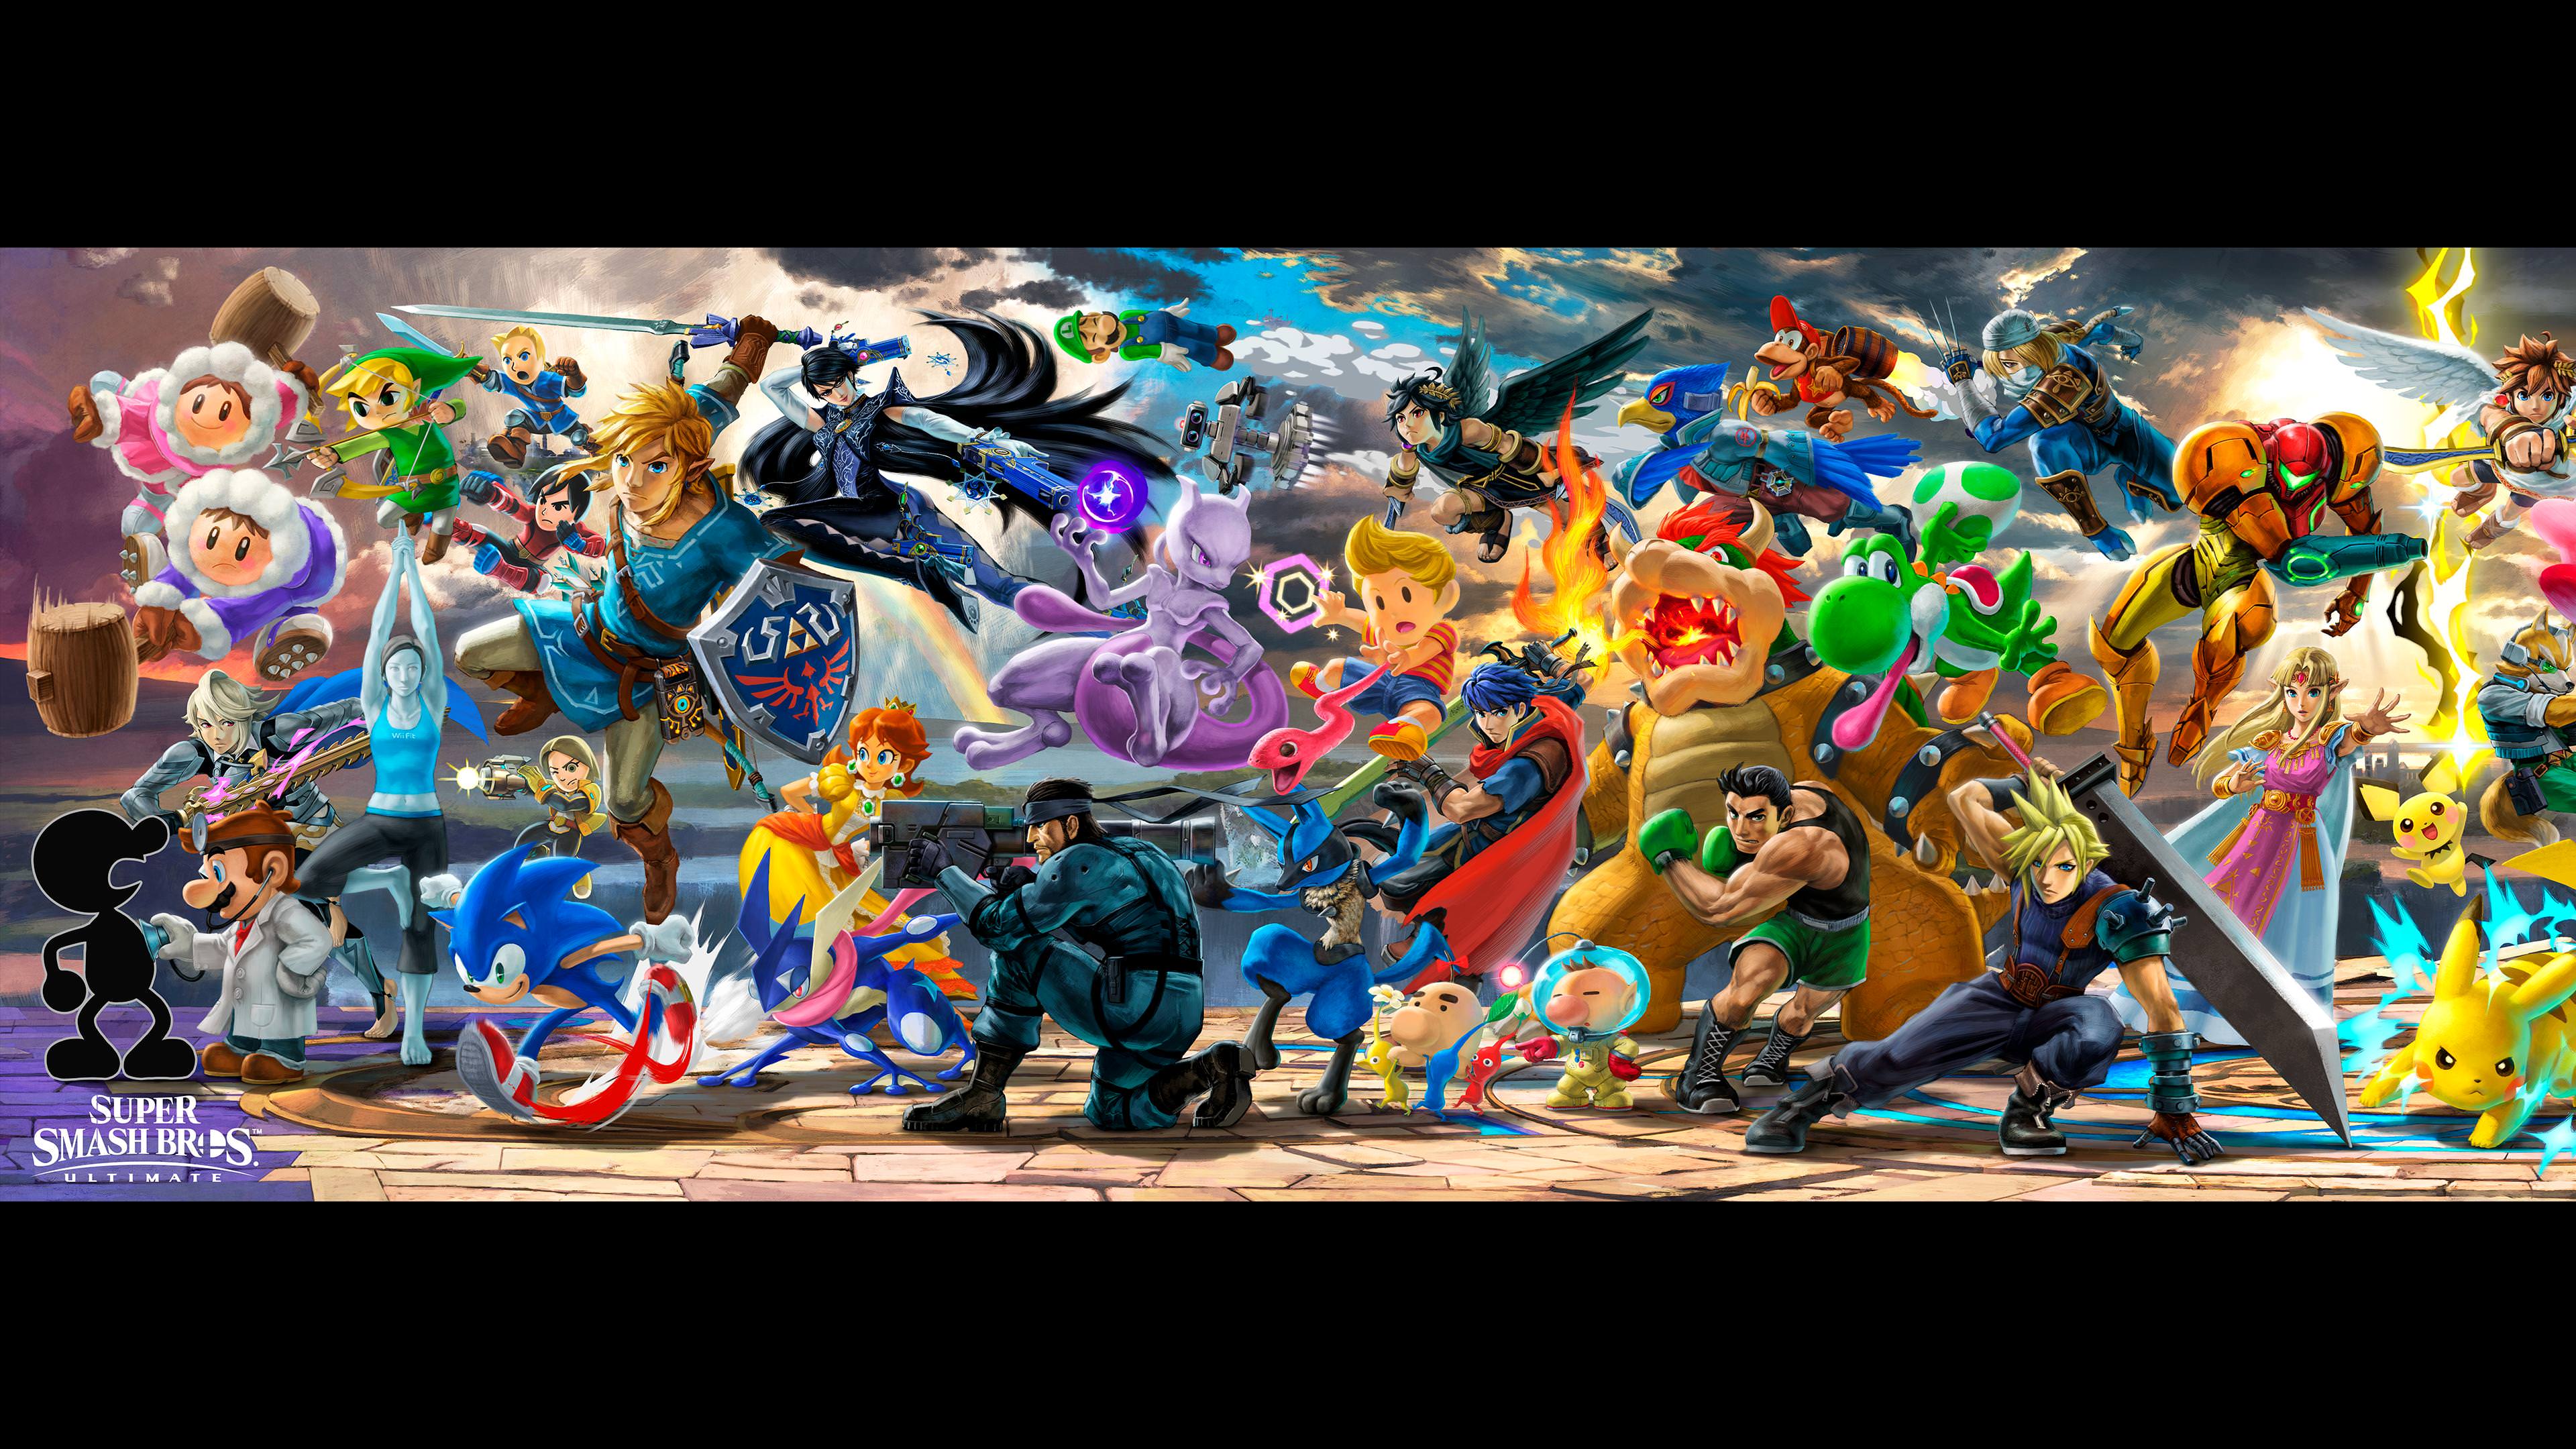 3840x2160] Super Smash Bros Ultimate banner for dual asymmetrical